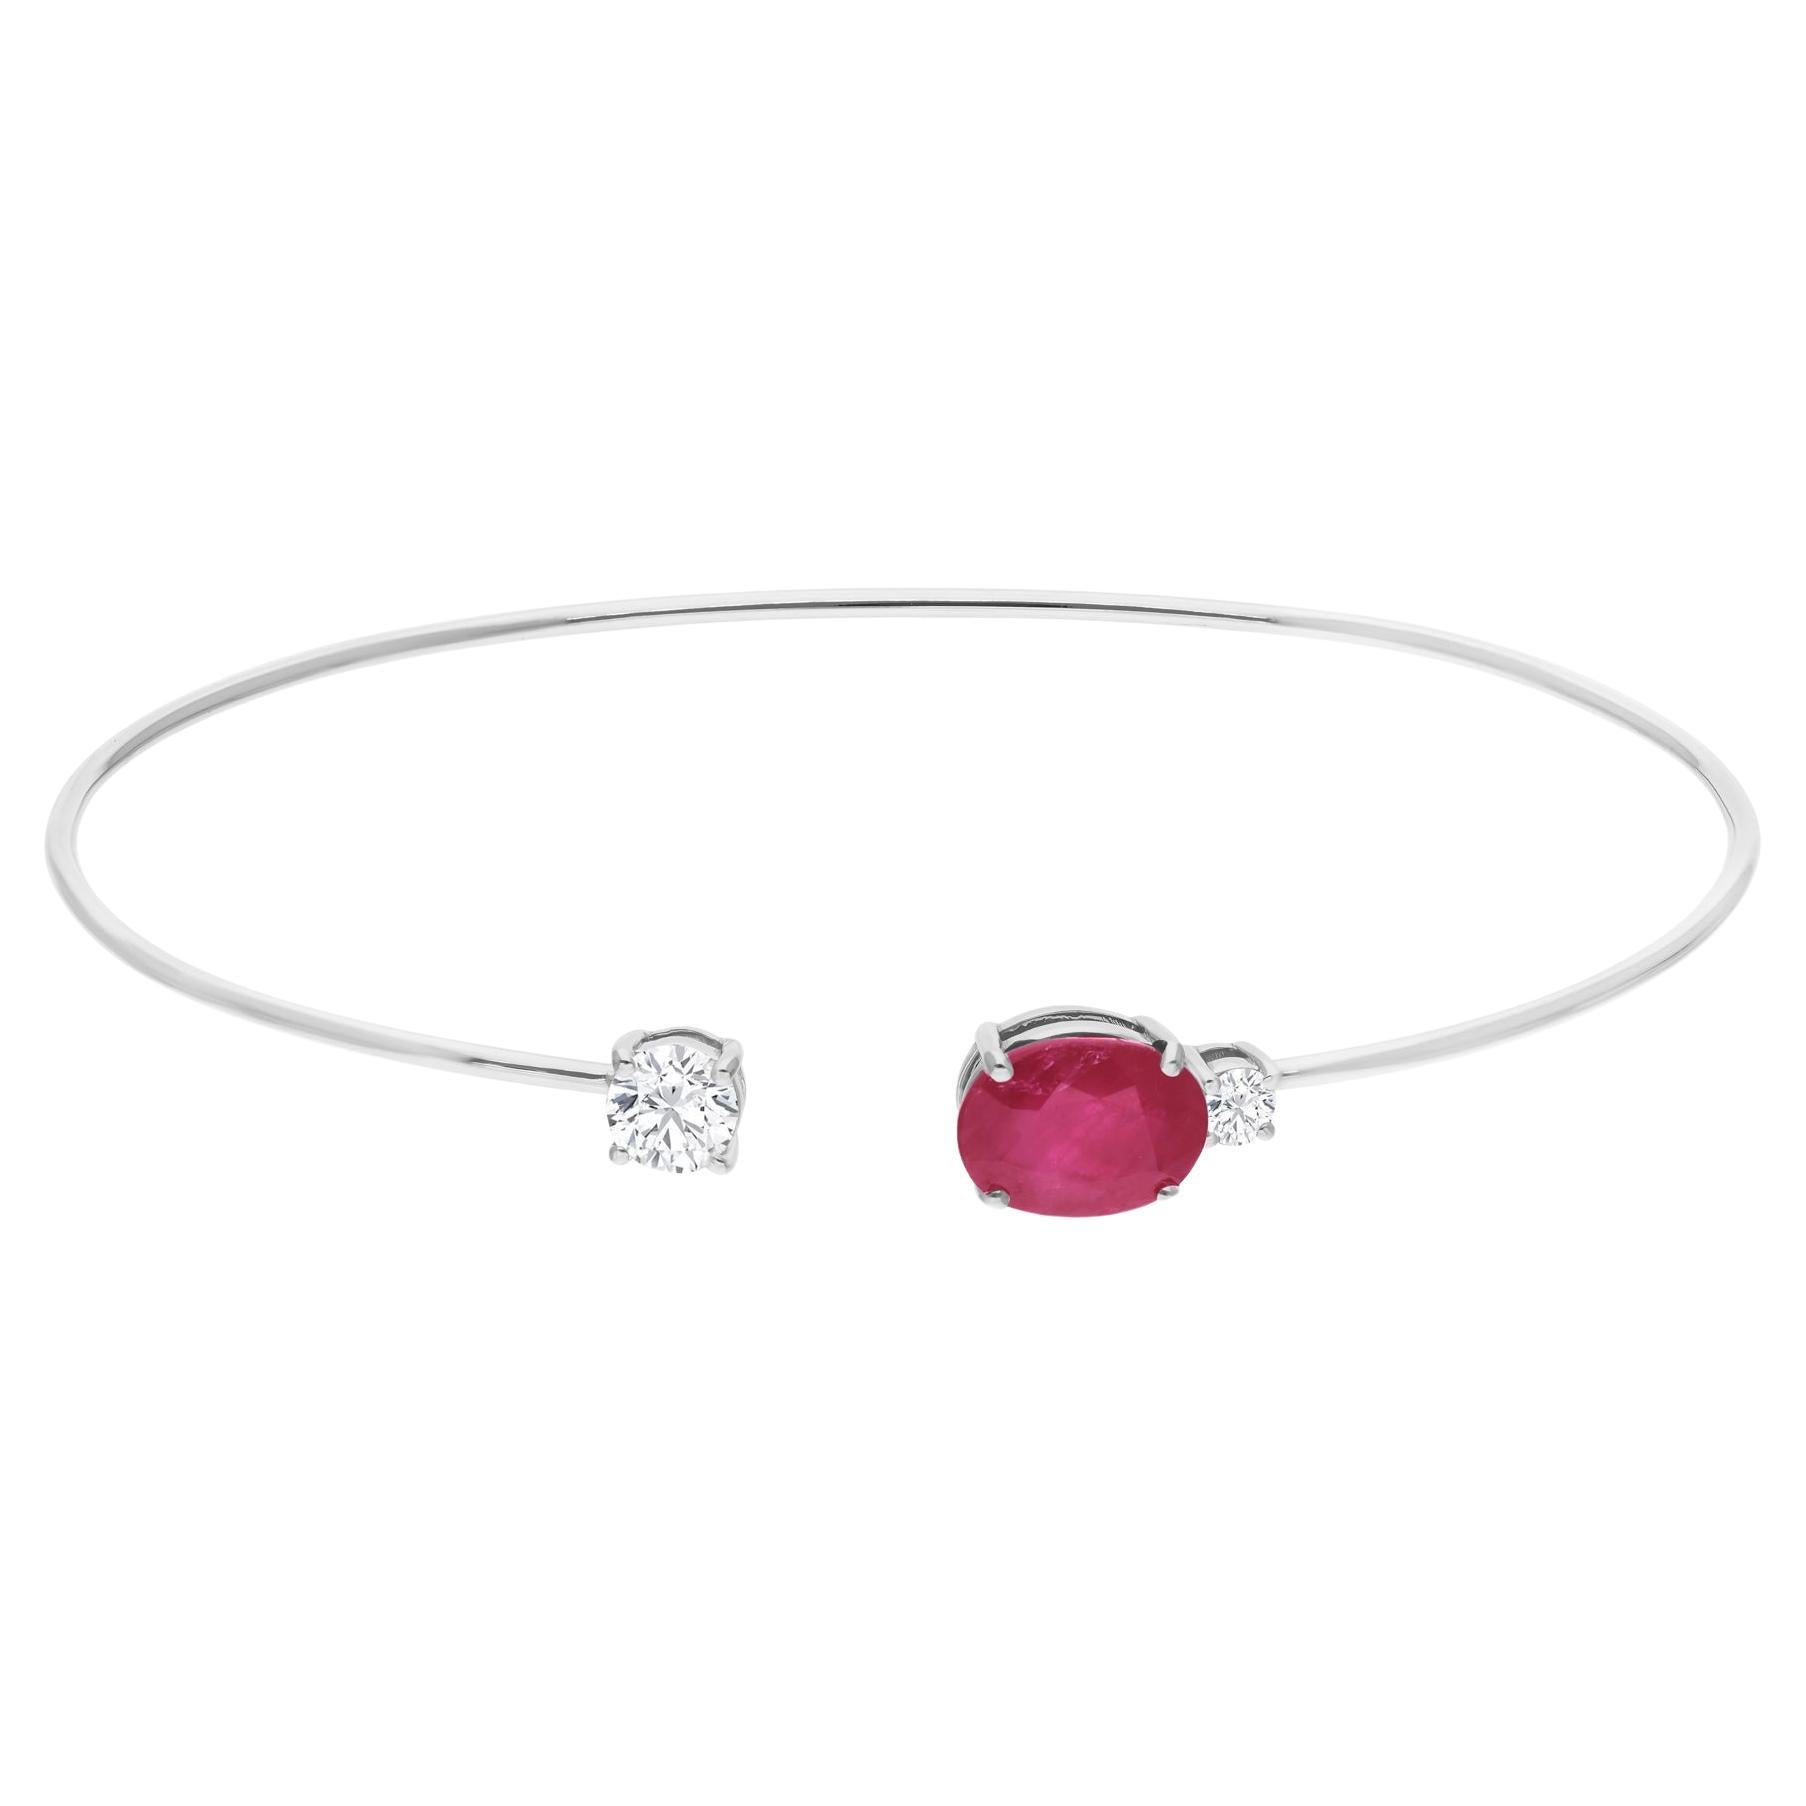 Oval Ruby Gemstone Cuff Bangle Diamond Open Bracelet 14 Karat White Gold Jewelry